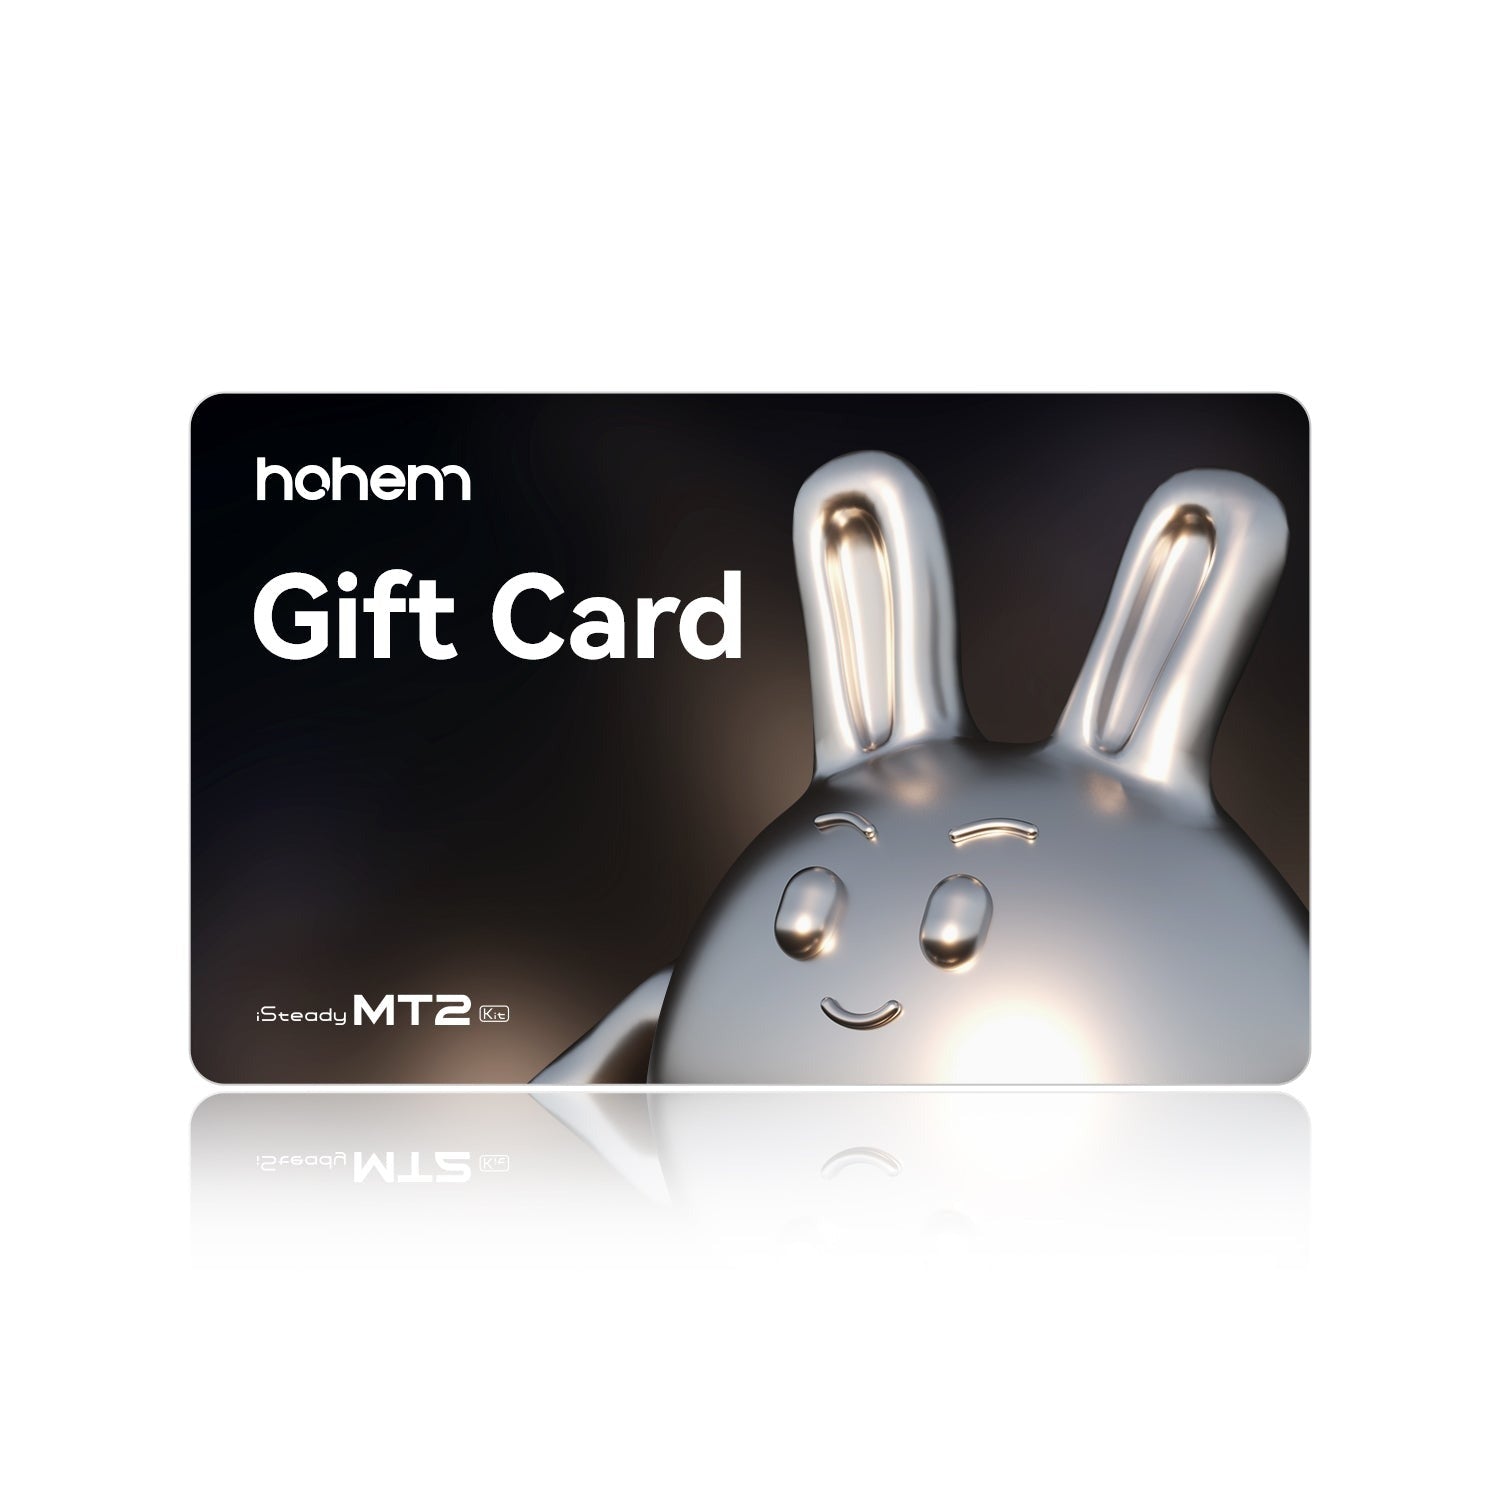 Hohem Mt2 gift card 